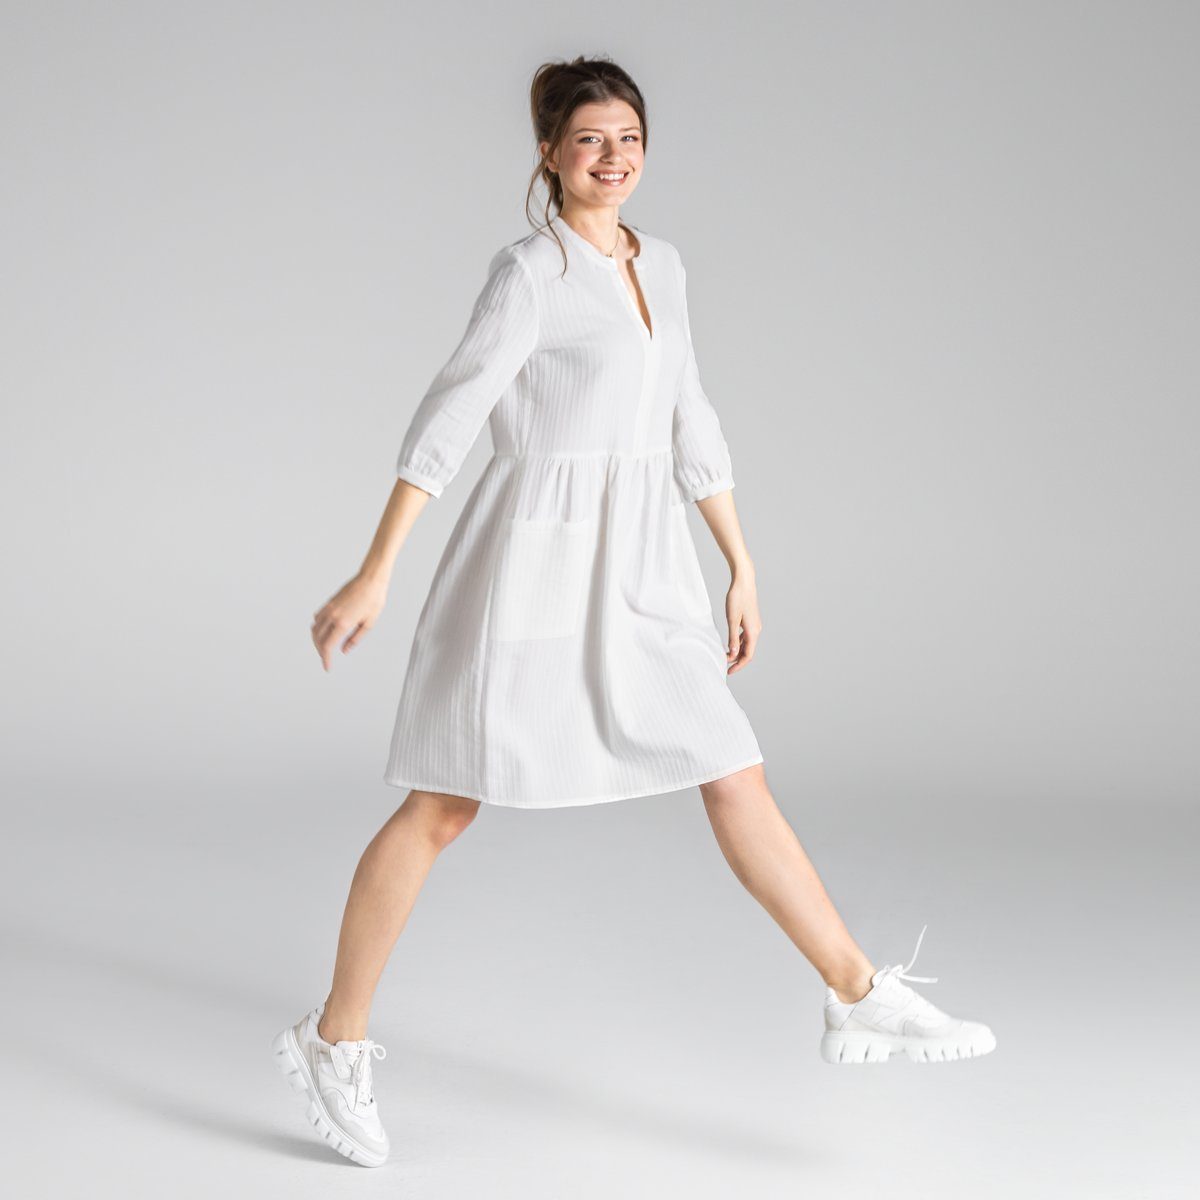 Luftiges BLOSWEN Sommerkleid Sommerkleid White trueStory